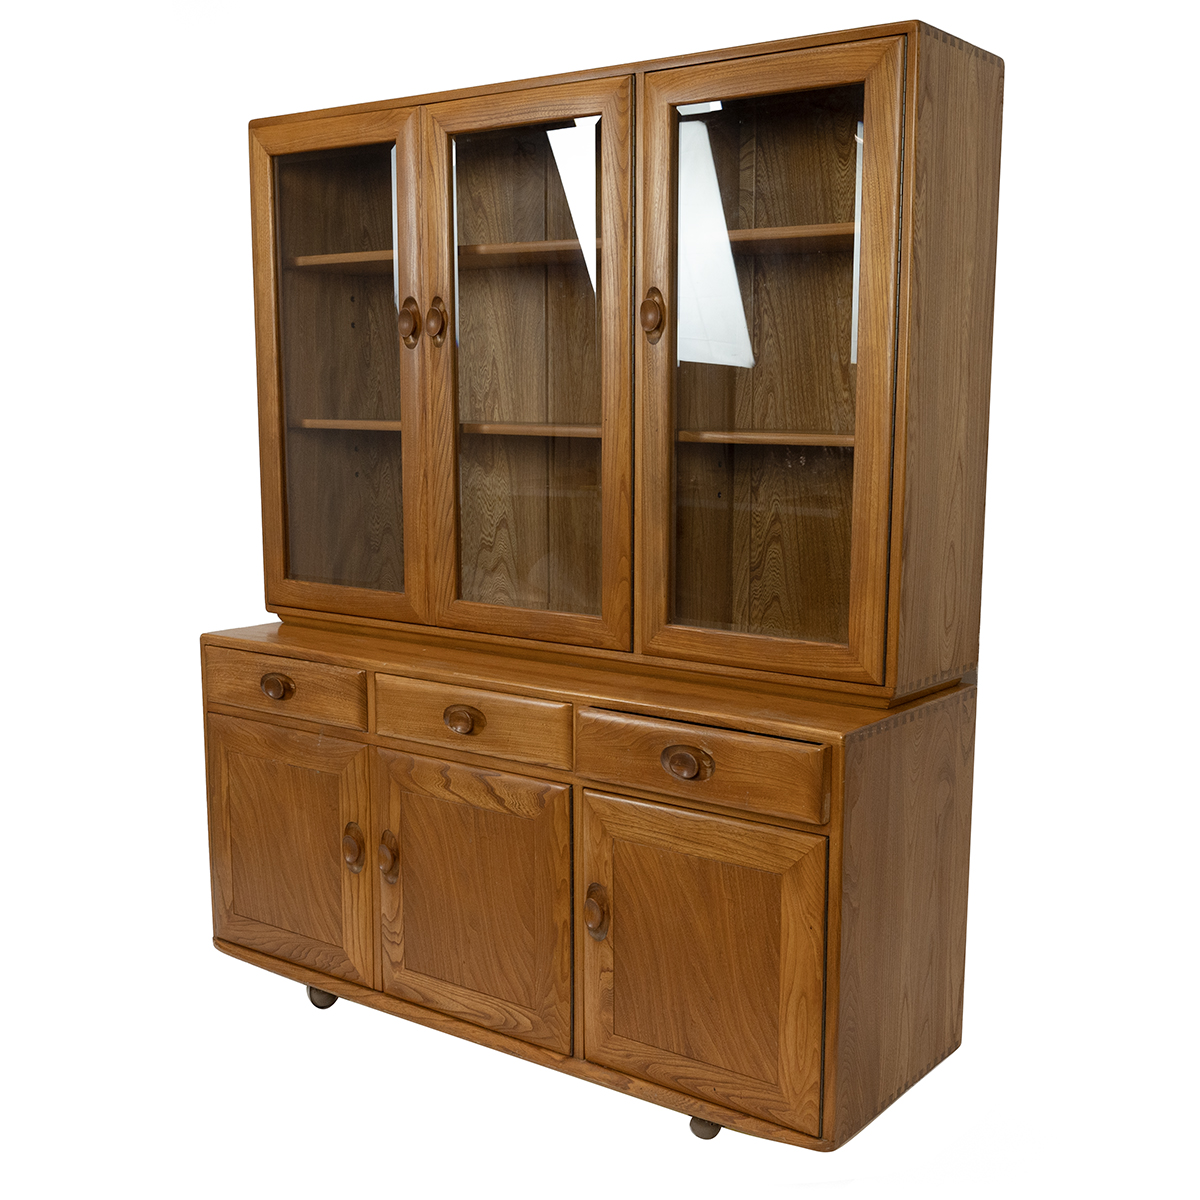 Ercol light elm Windsor design bookcase sideboard. Three glazed doors opening to reveal adjustabl... - Image 3 of 5